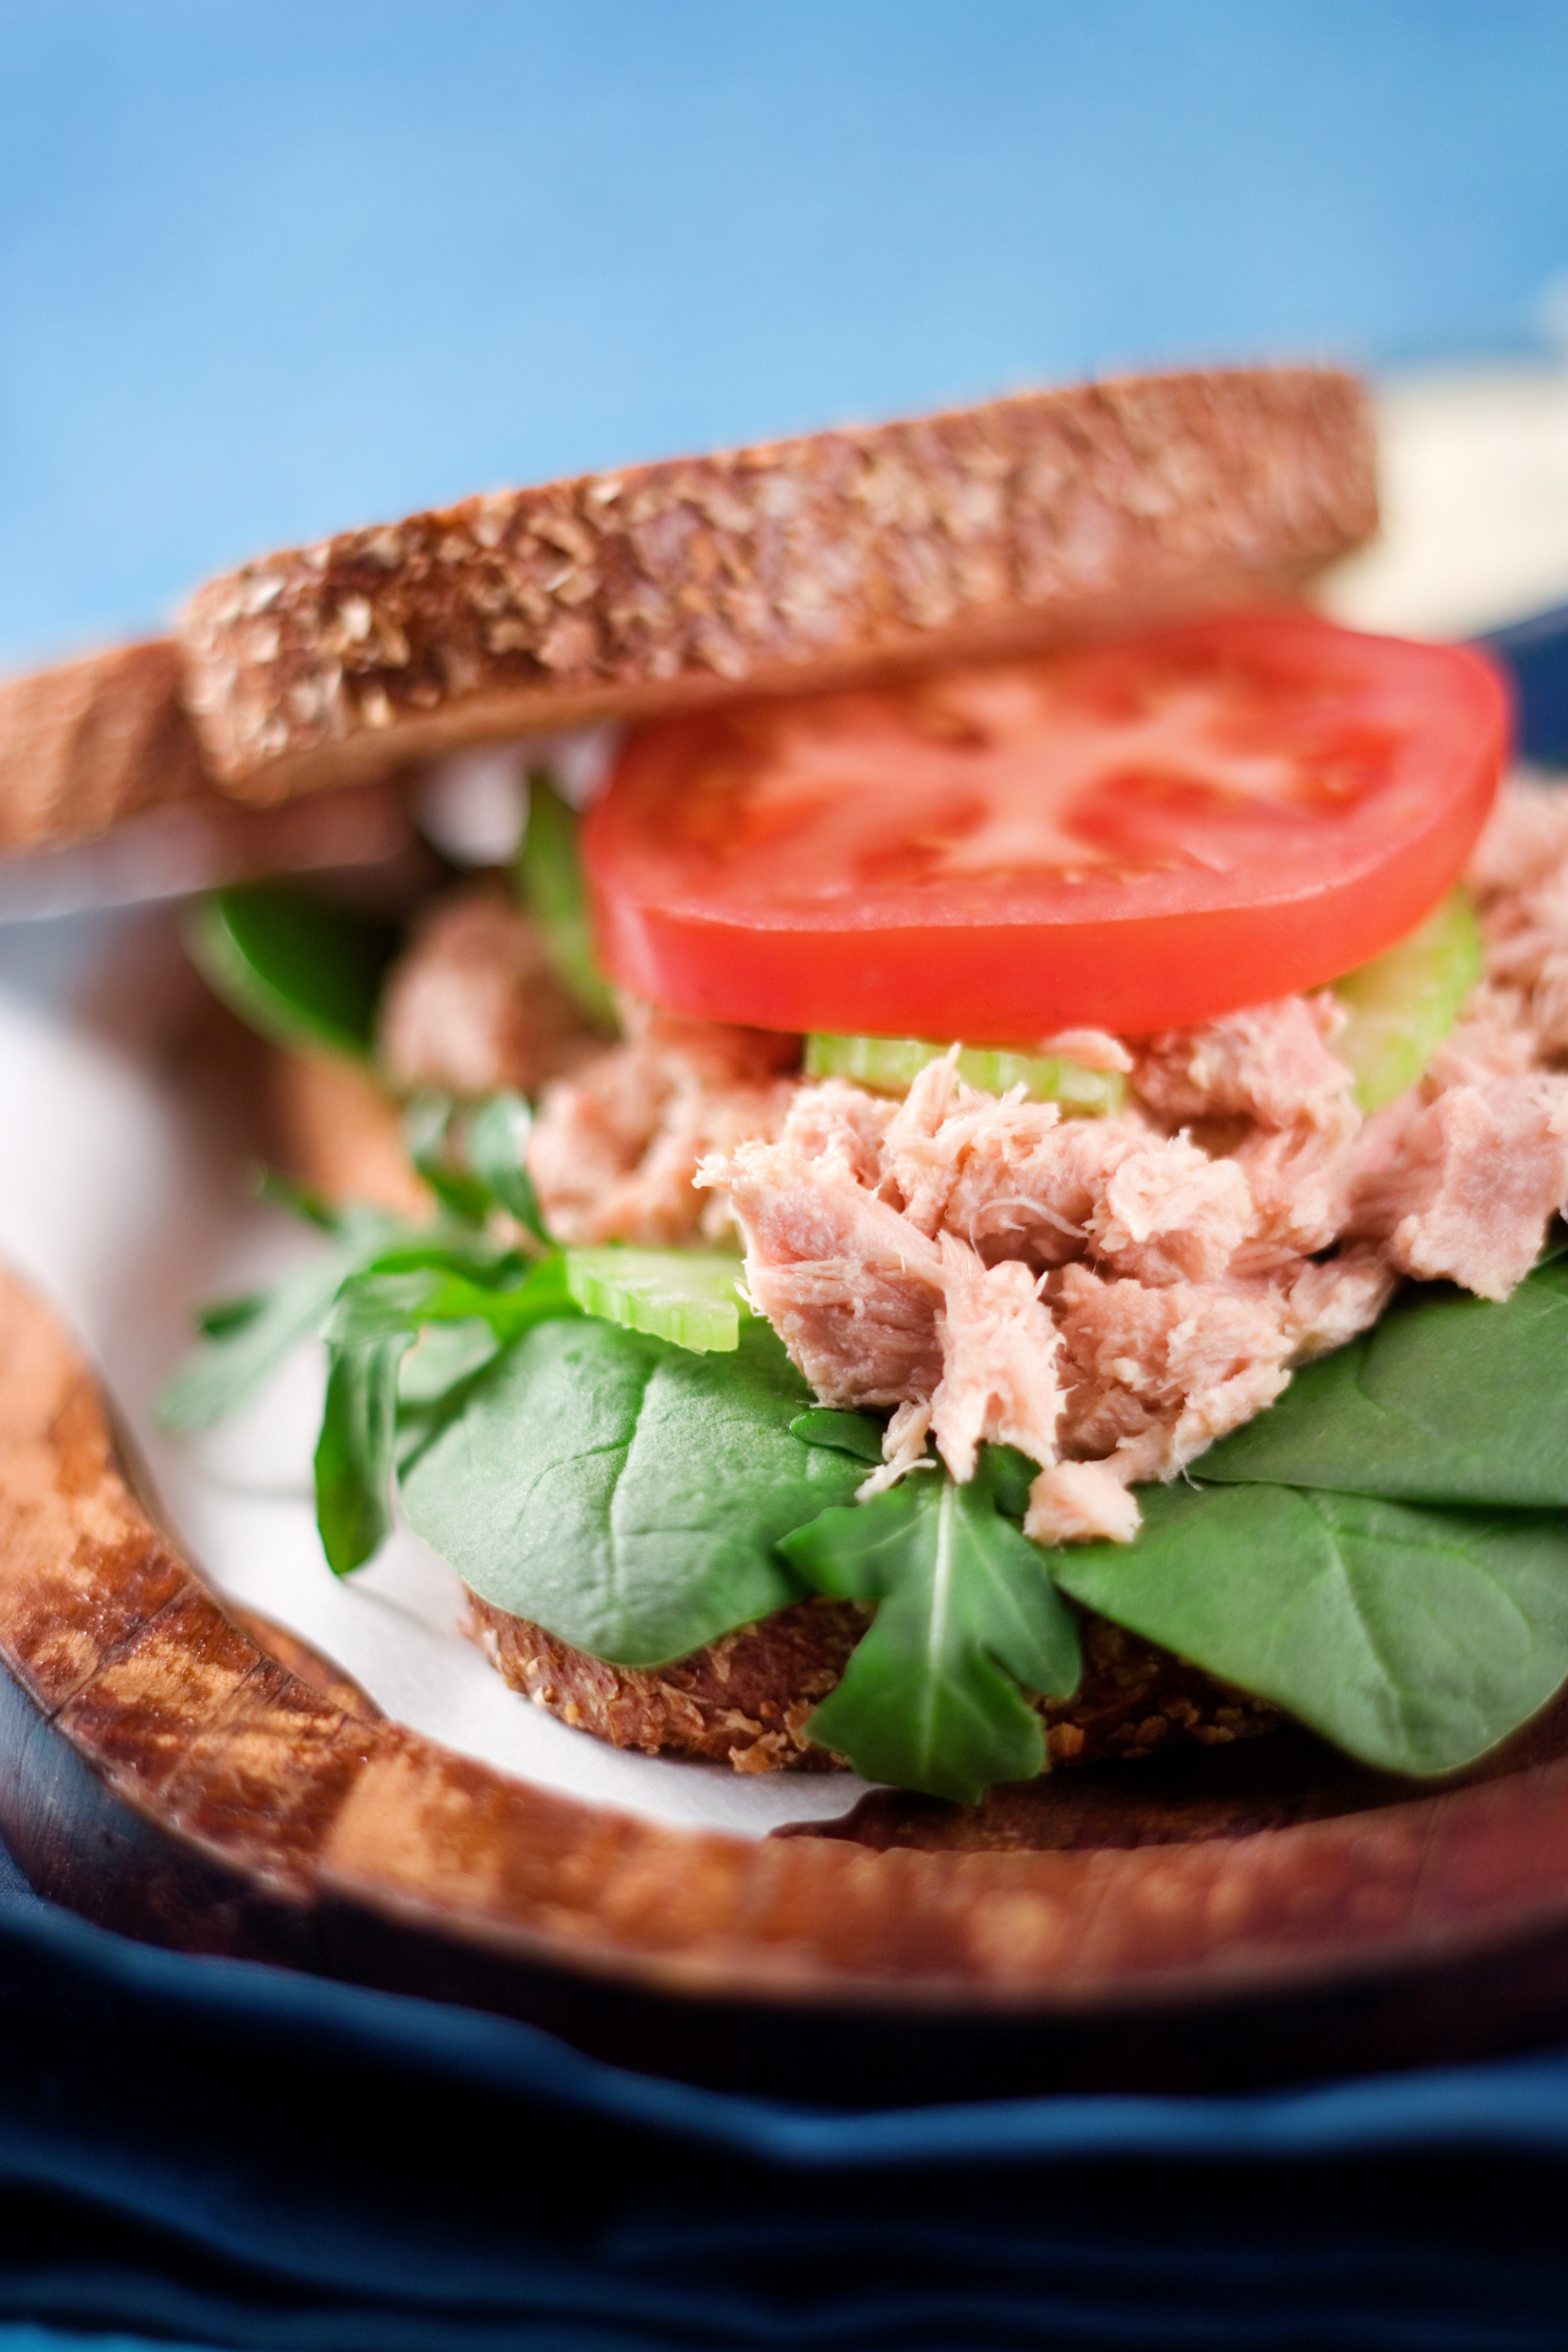 A tuna sandwich with lettuce and tomato